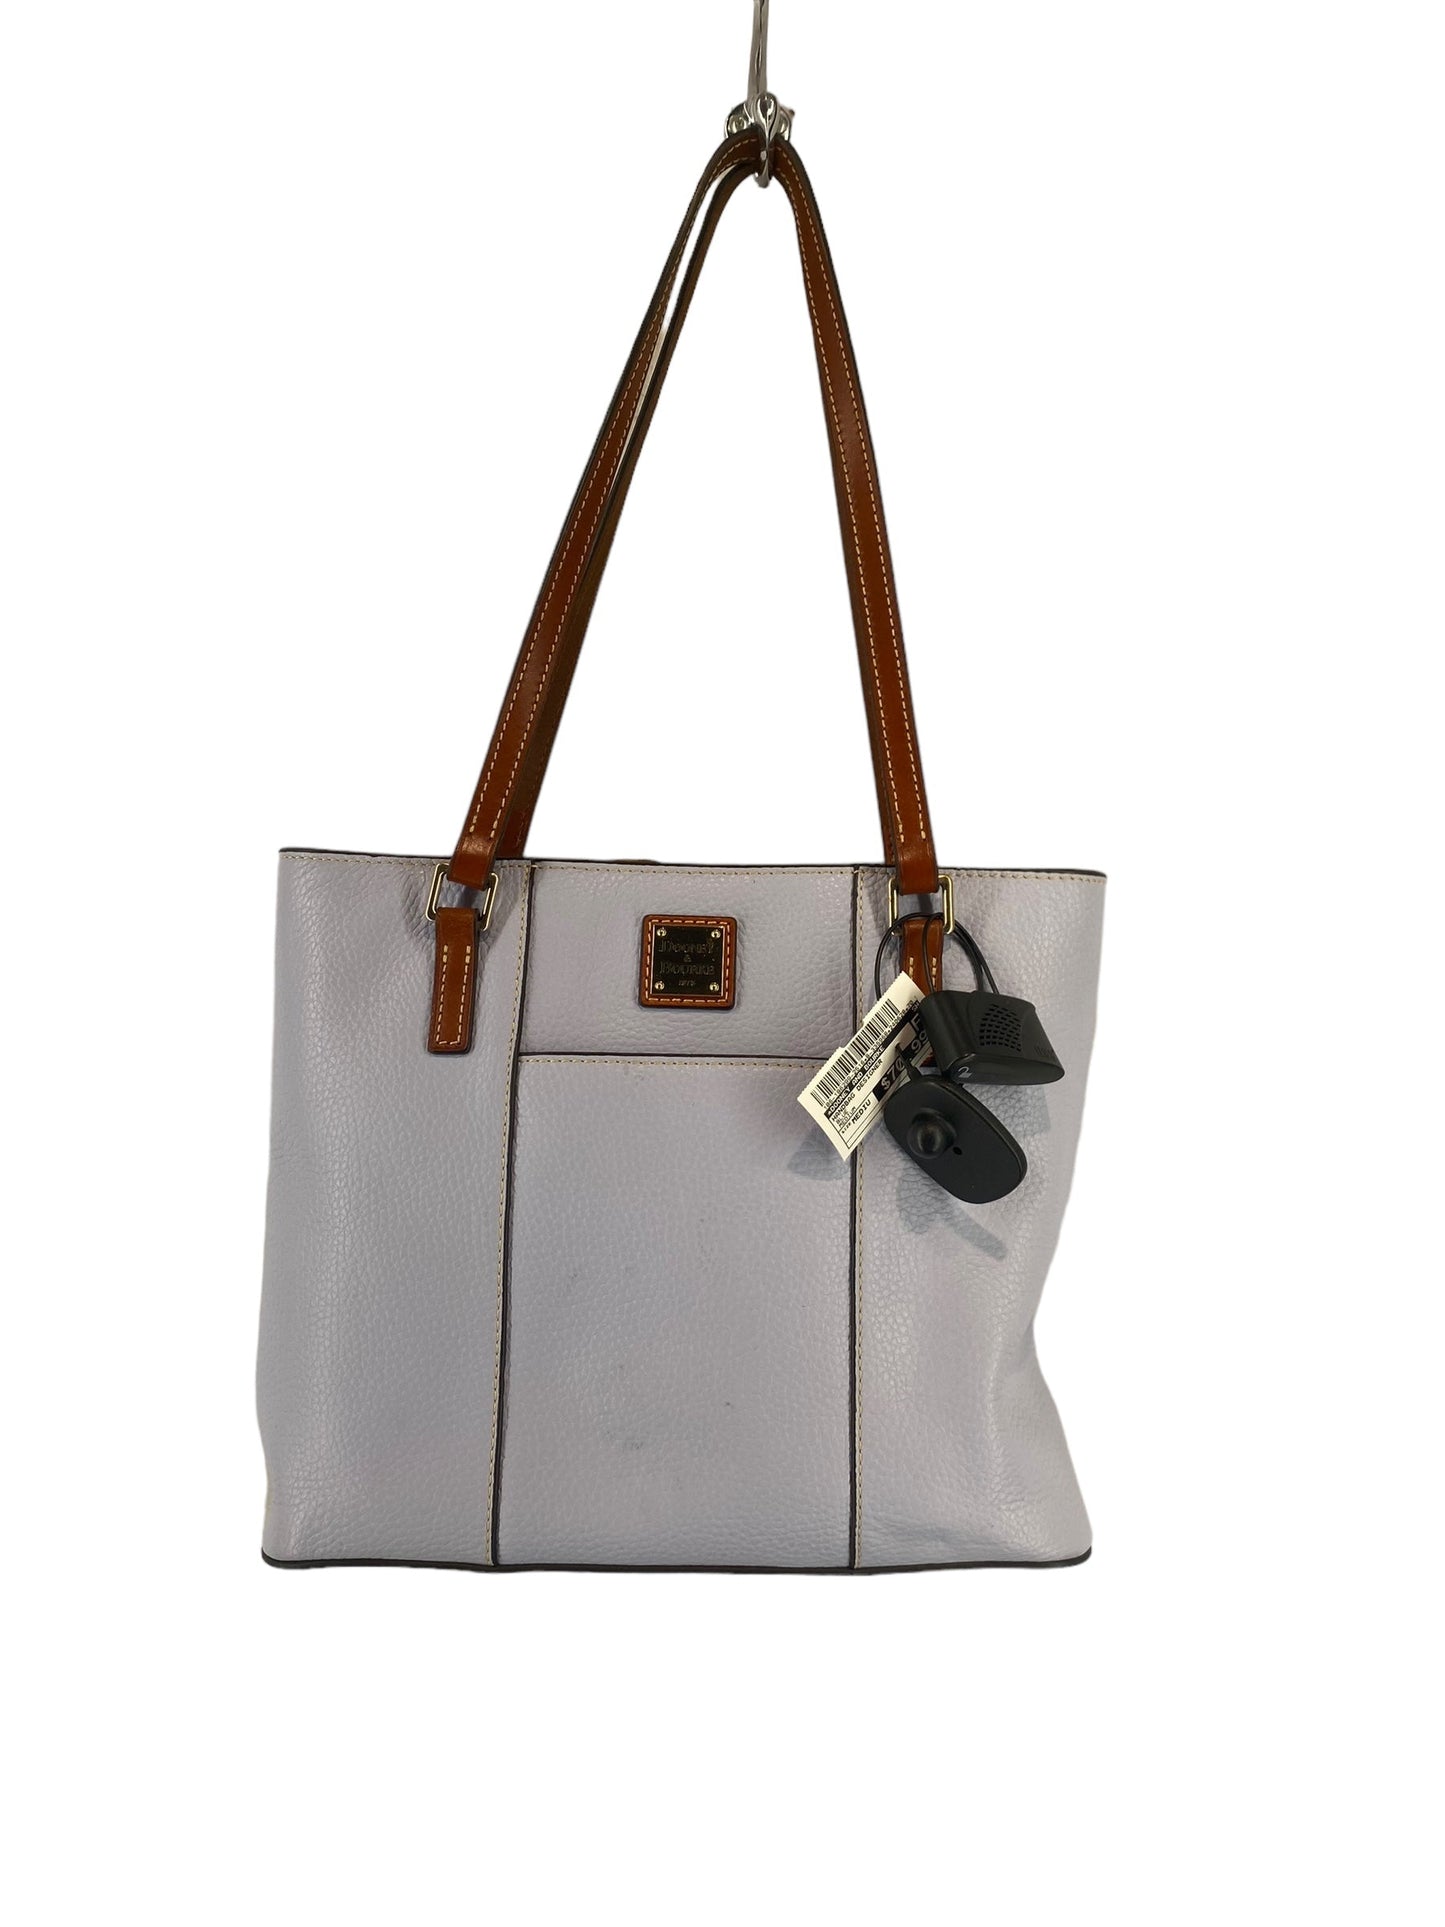 Handbag Designer Dooney And Bourke, Size Medium